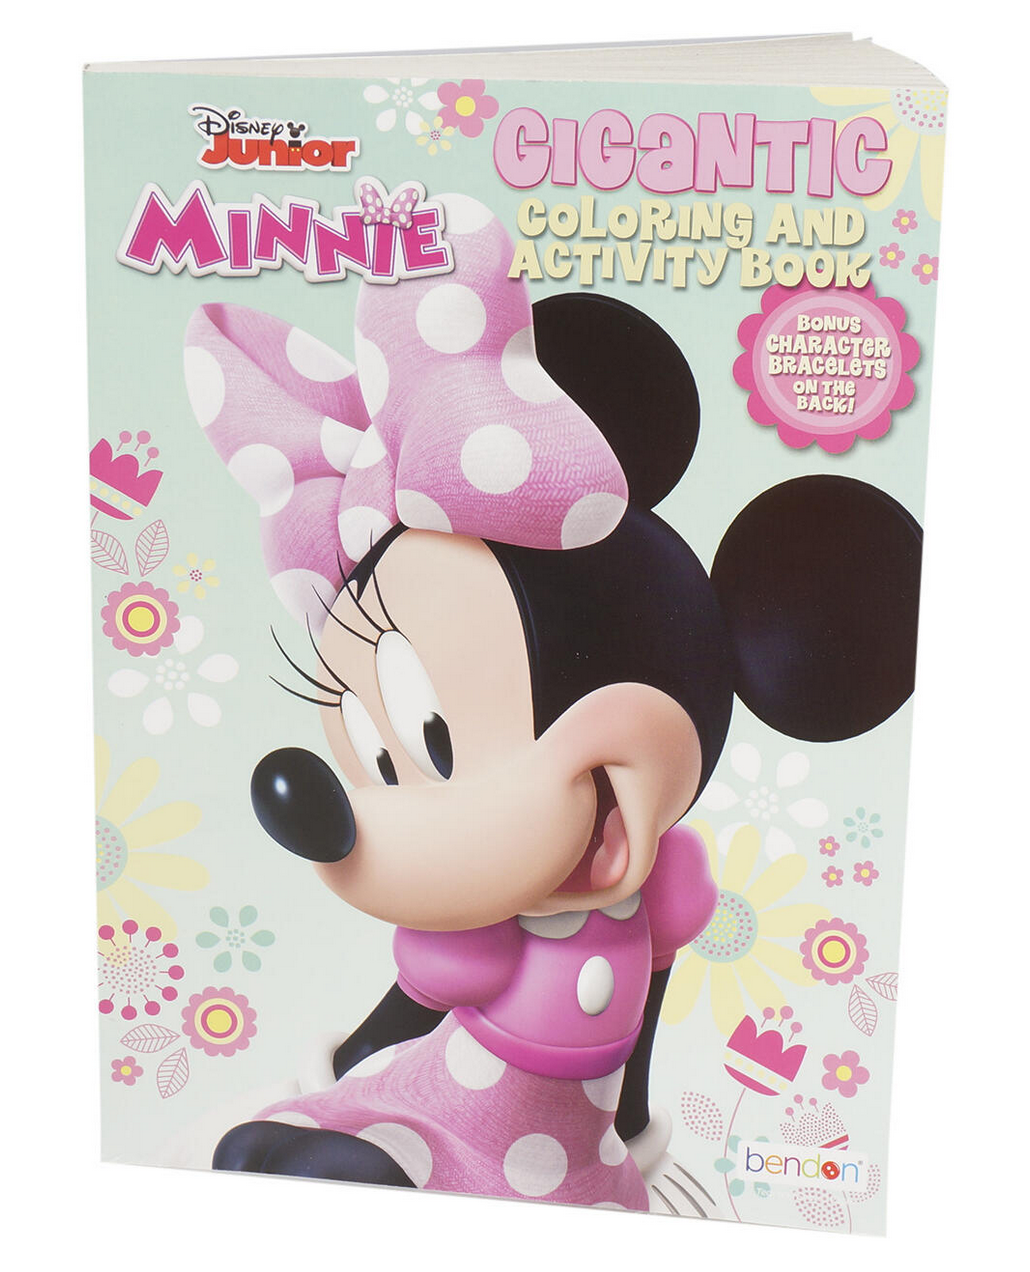 Disney Minnie Mouse Gigantic Activity Book - $7.91